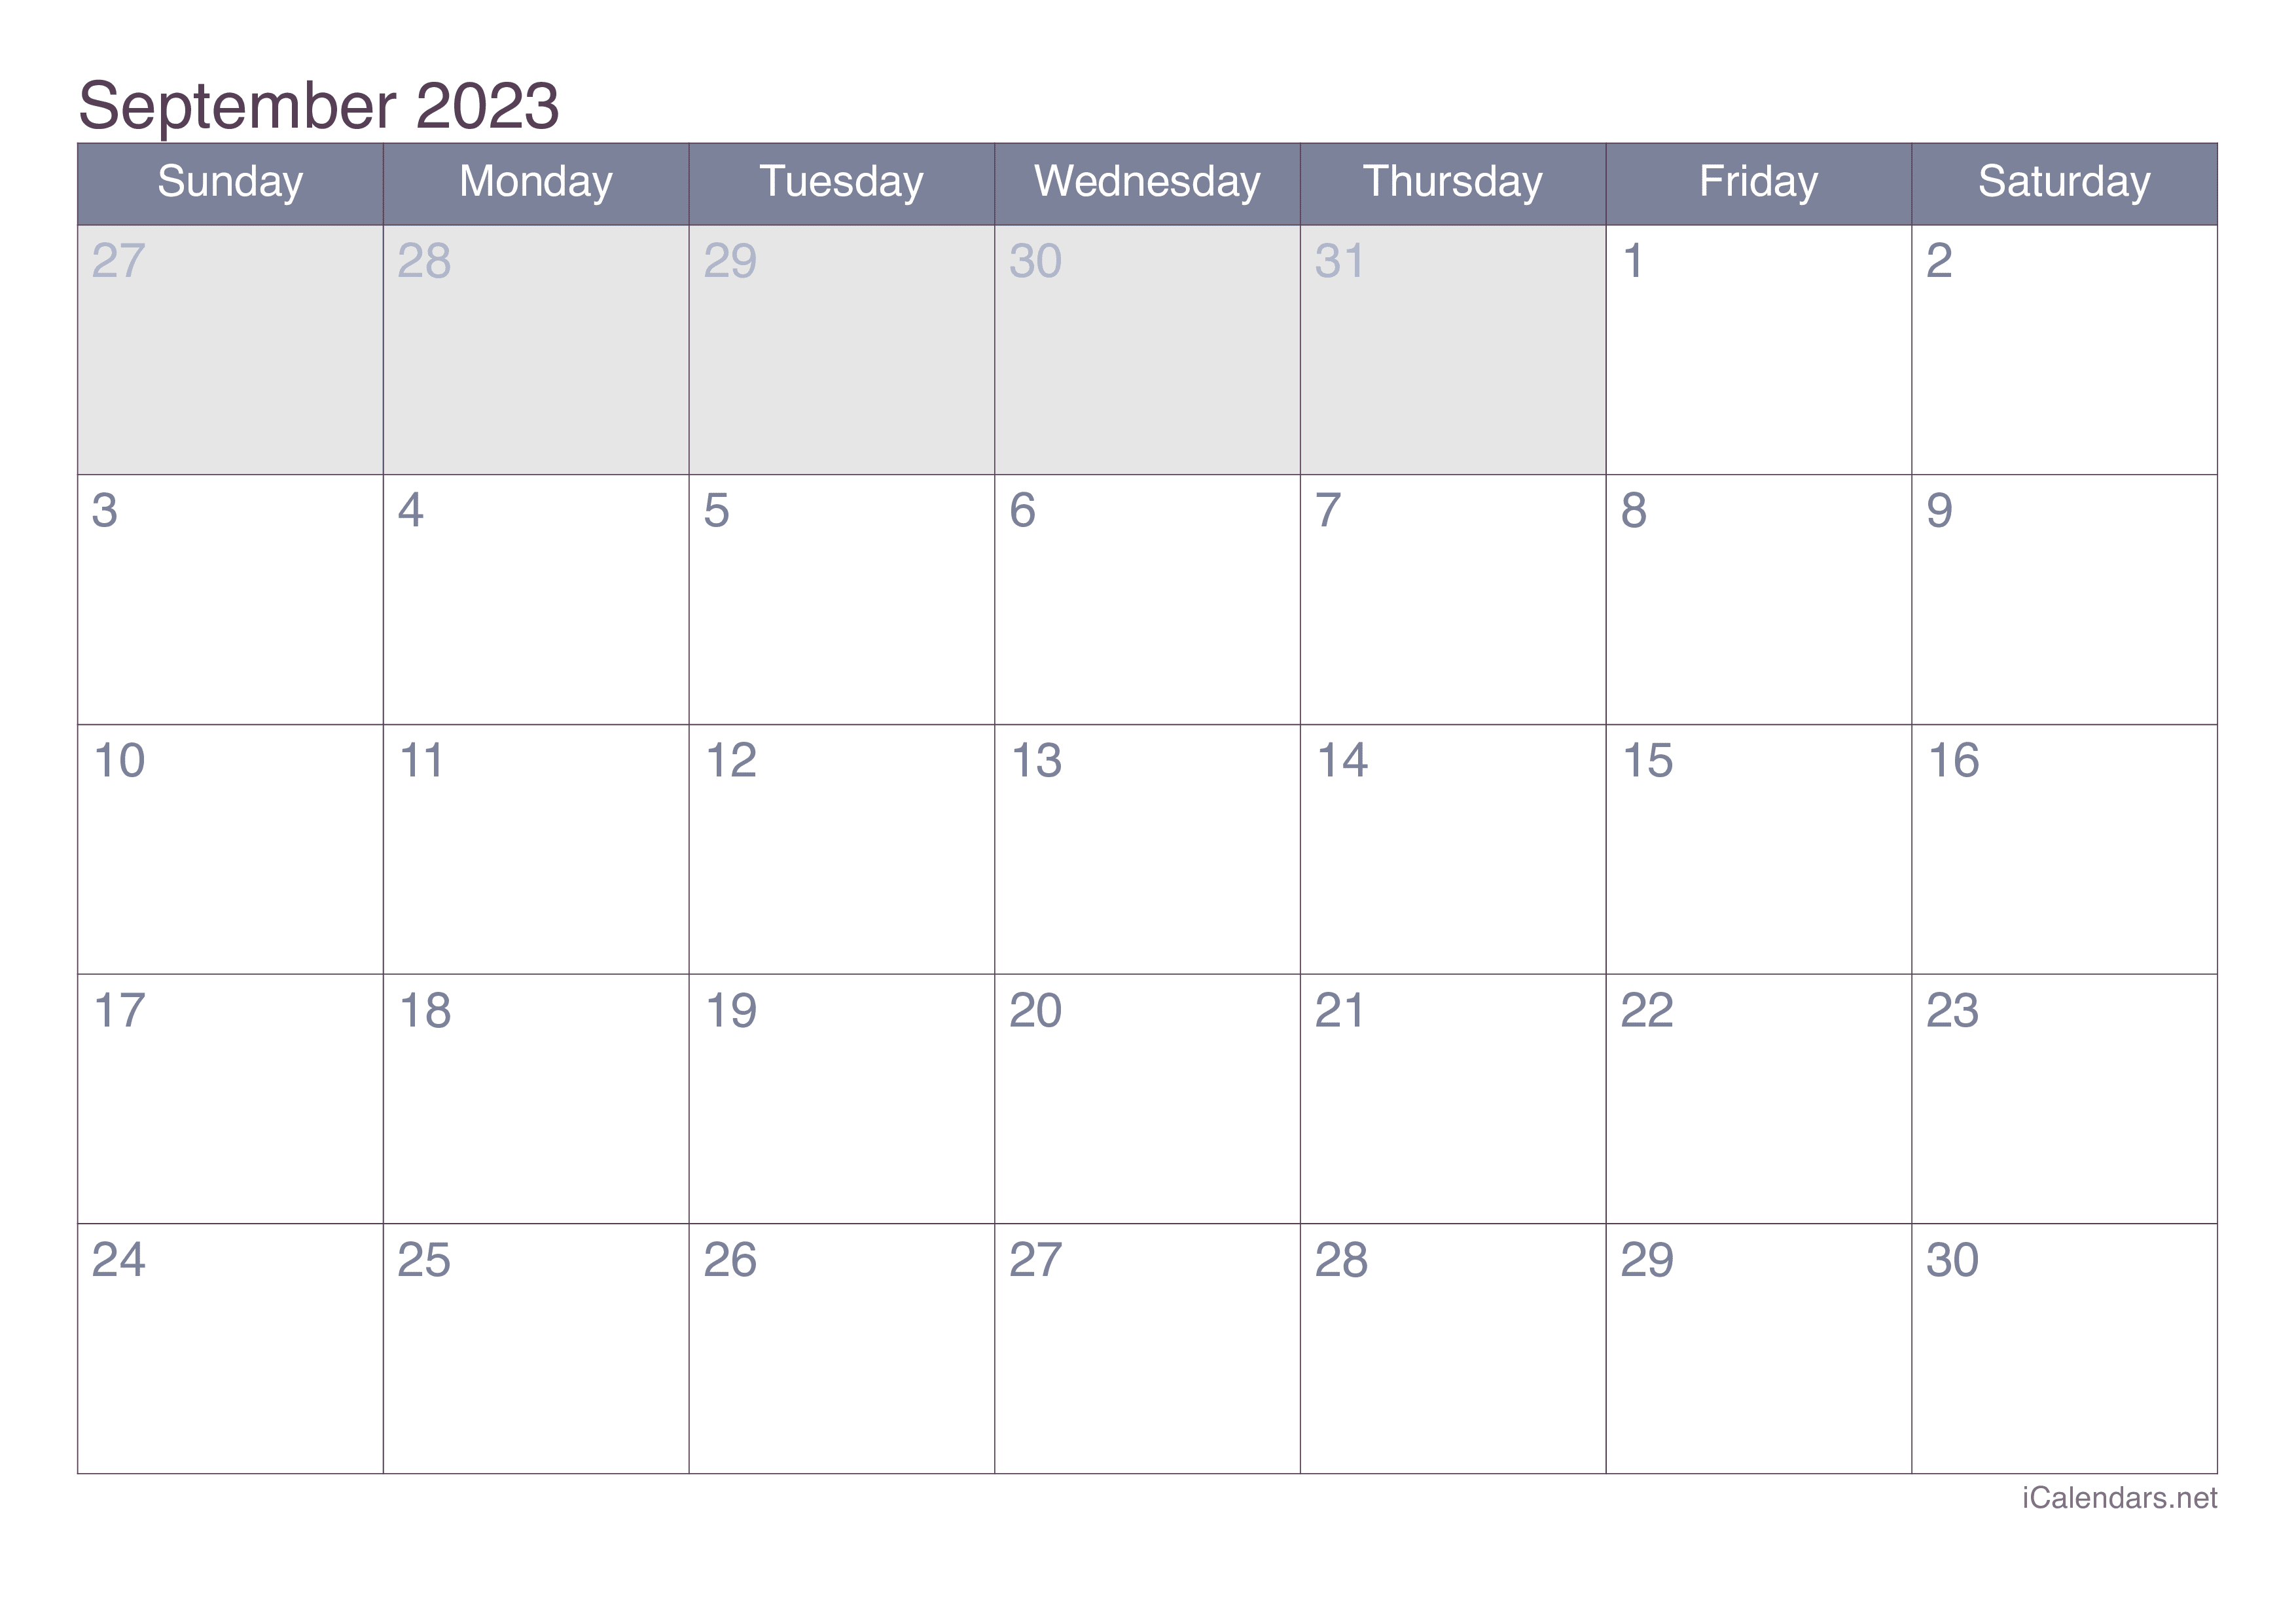 september-2023-calendar-free-printable-calendar-september-2023